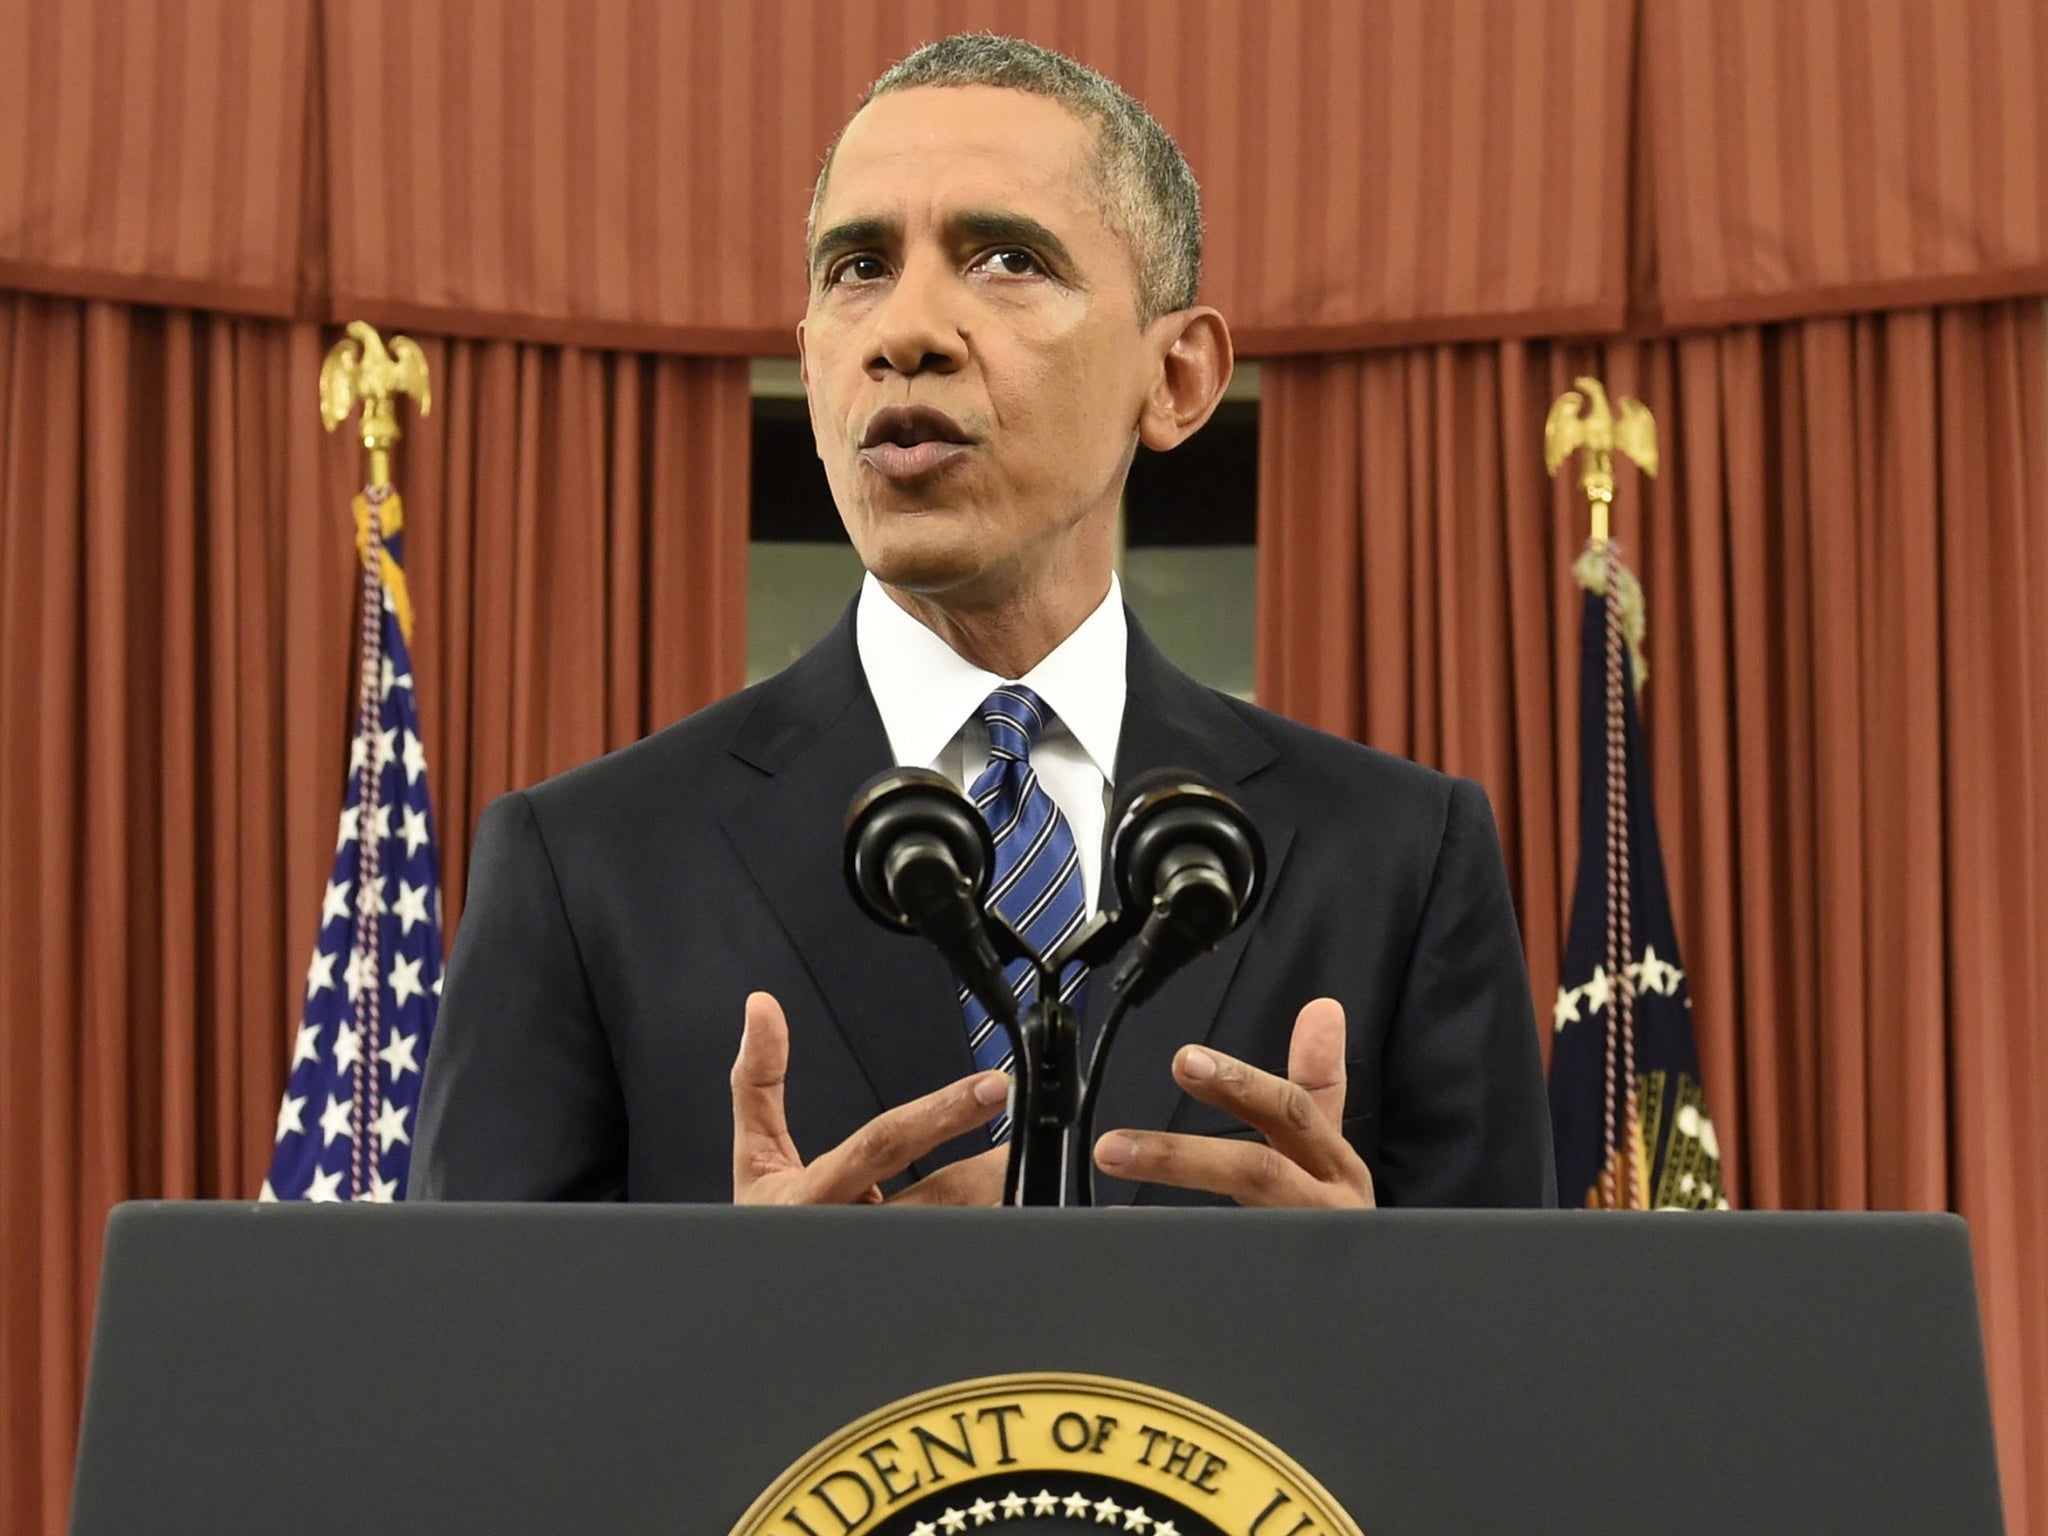 President Barack Obama’s national address on terrorism from the Oval Office